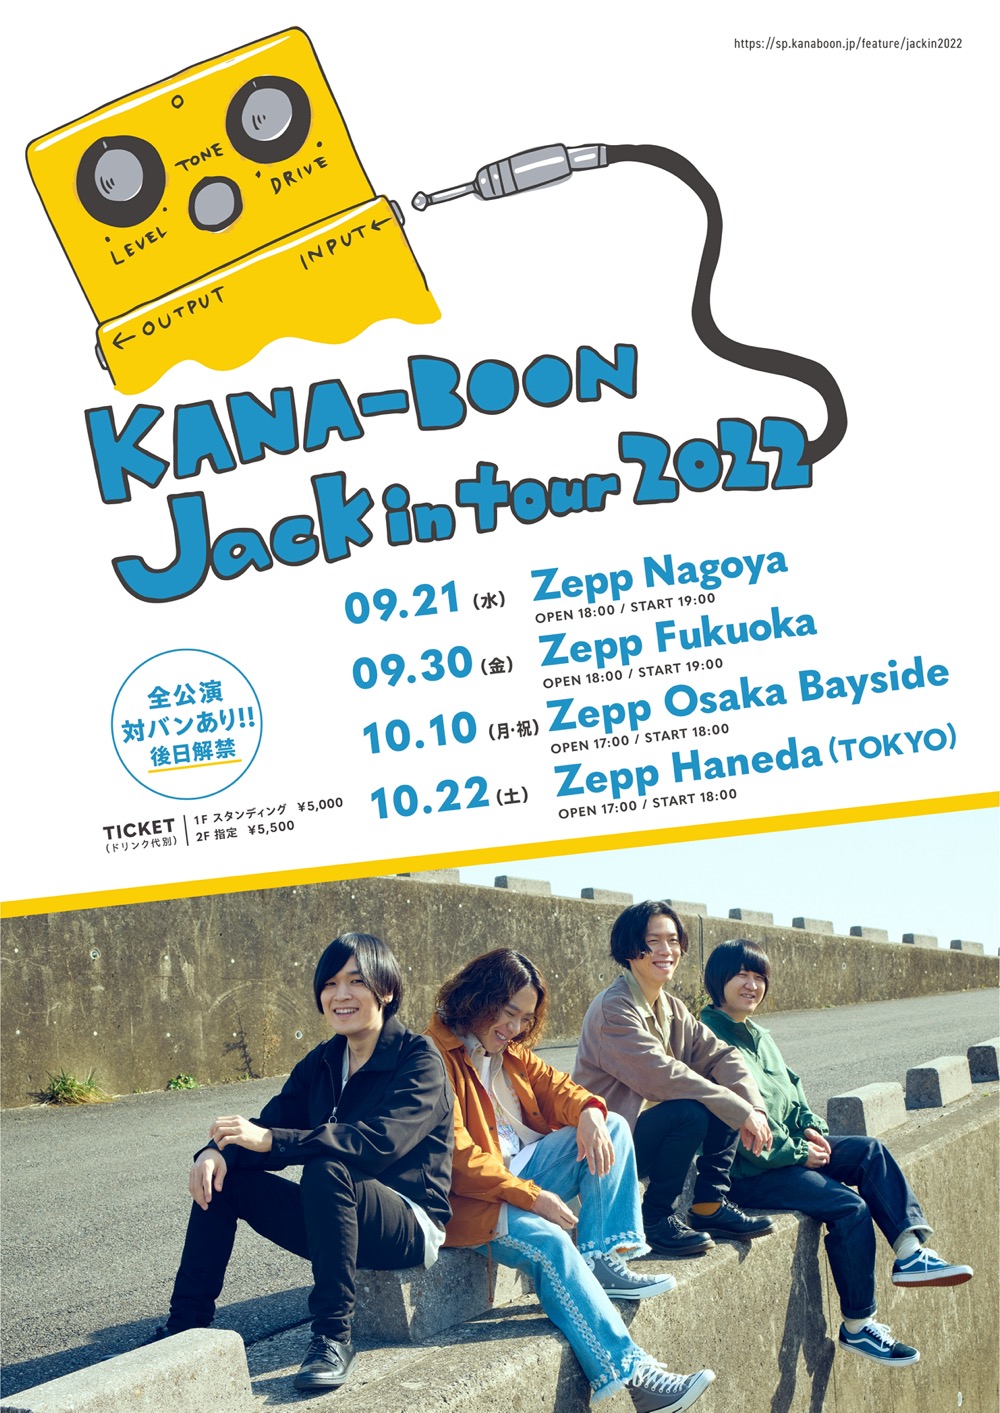 KANA-BOON、約4年ぶりとなる対バンツアー『KANA-BOON Jack in tour 2022』開催決定 - 画像一覧（1/2）